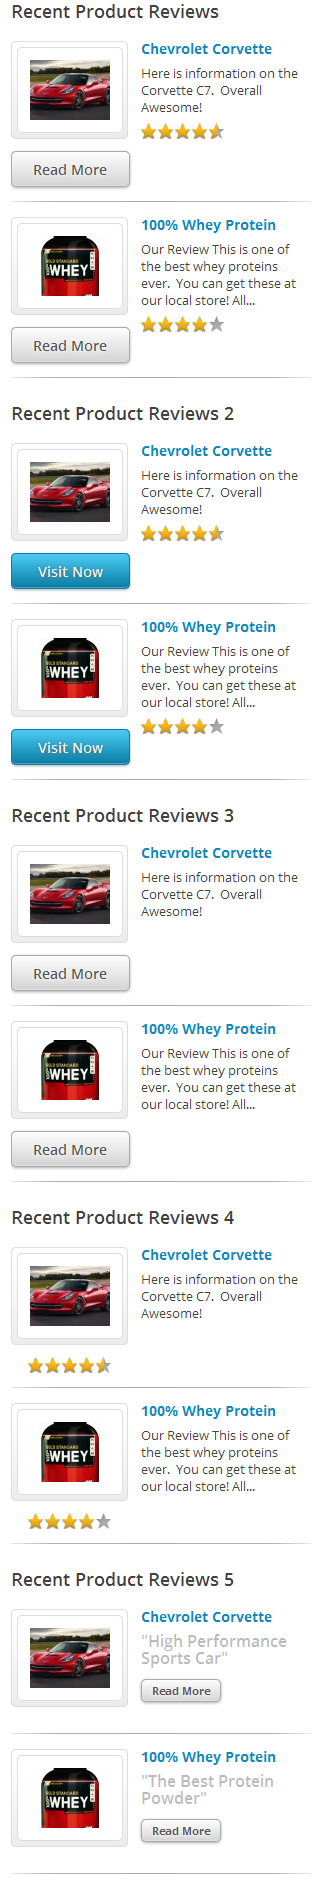 Product Reviews Widget